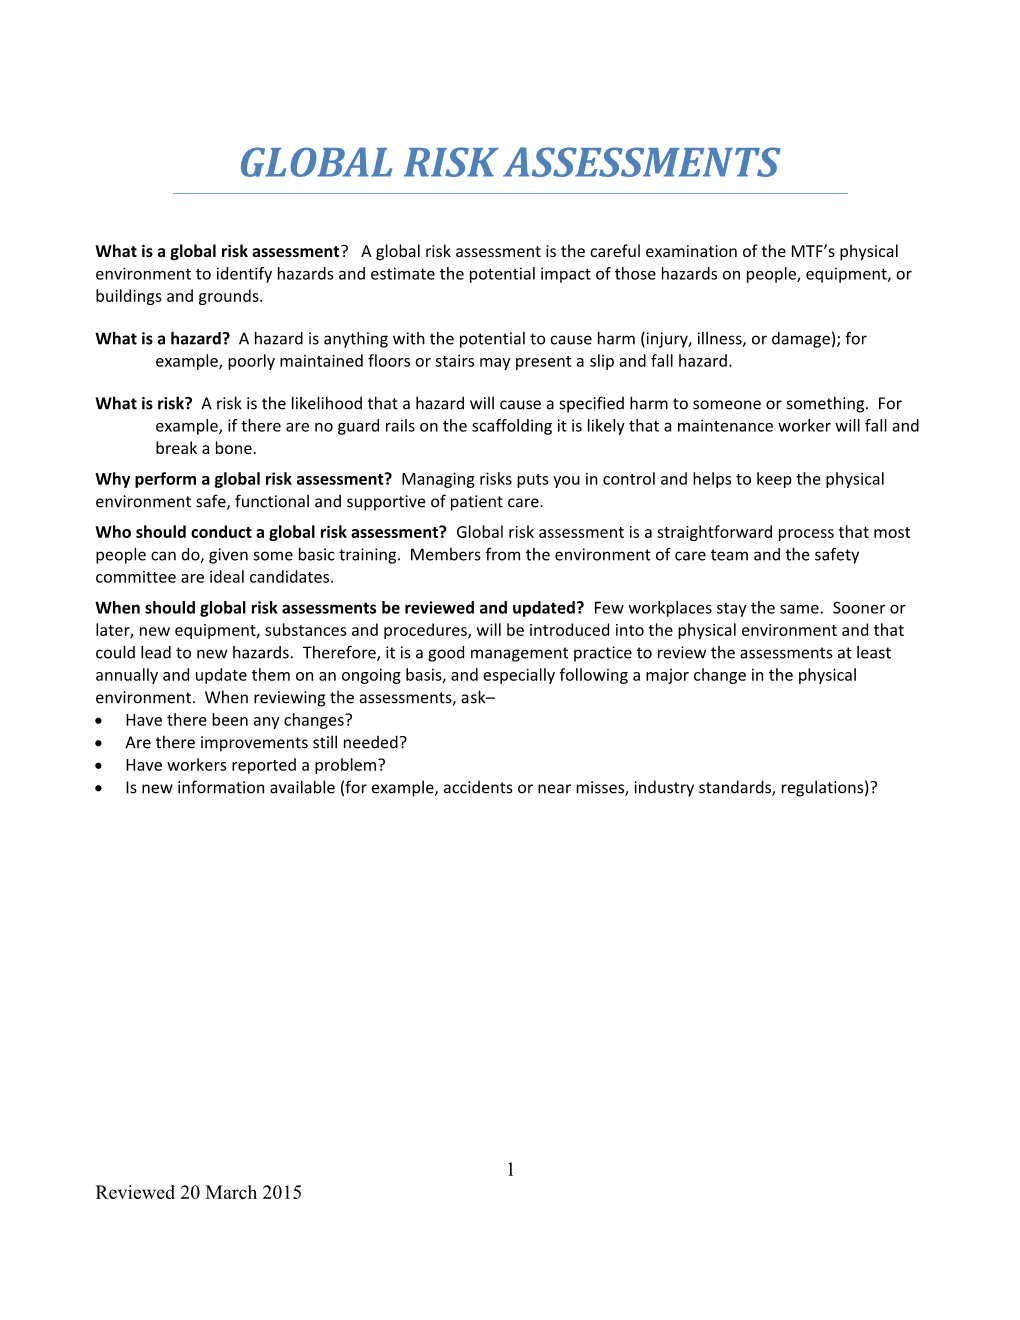 Medical Safety Template - Global Risk Assessments